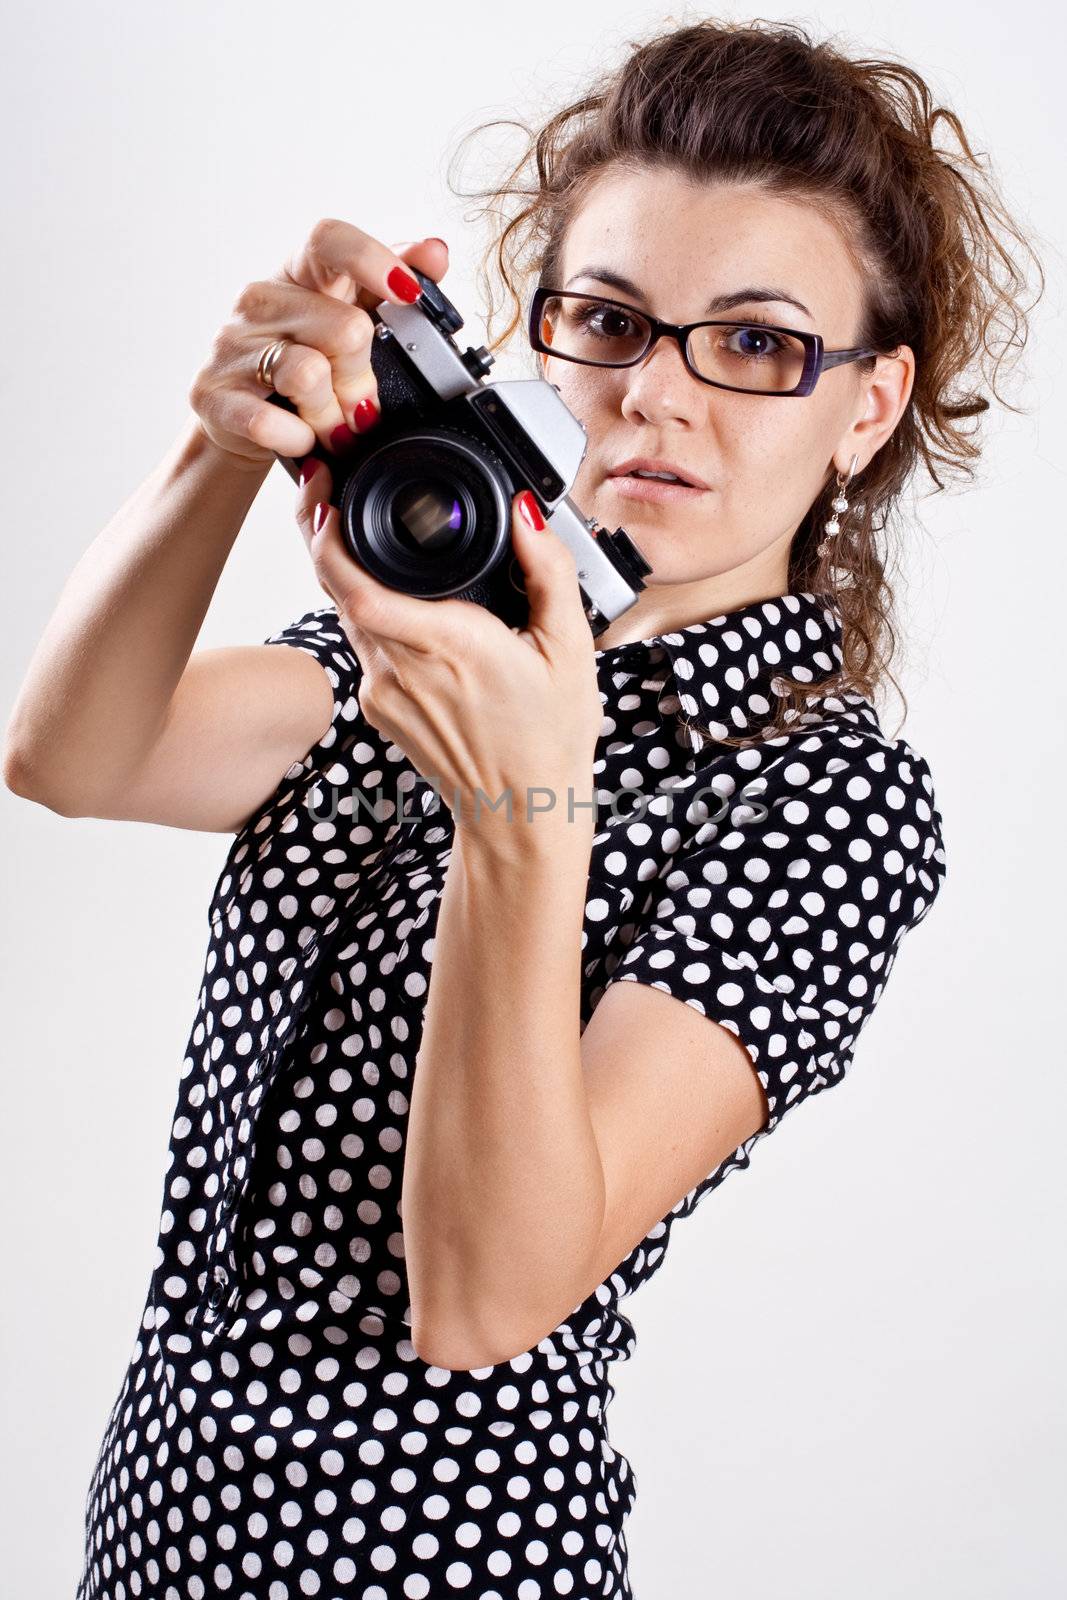 beautiful woman in a black polka dot dress with camera